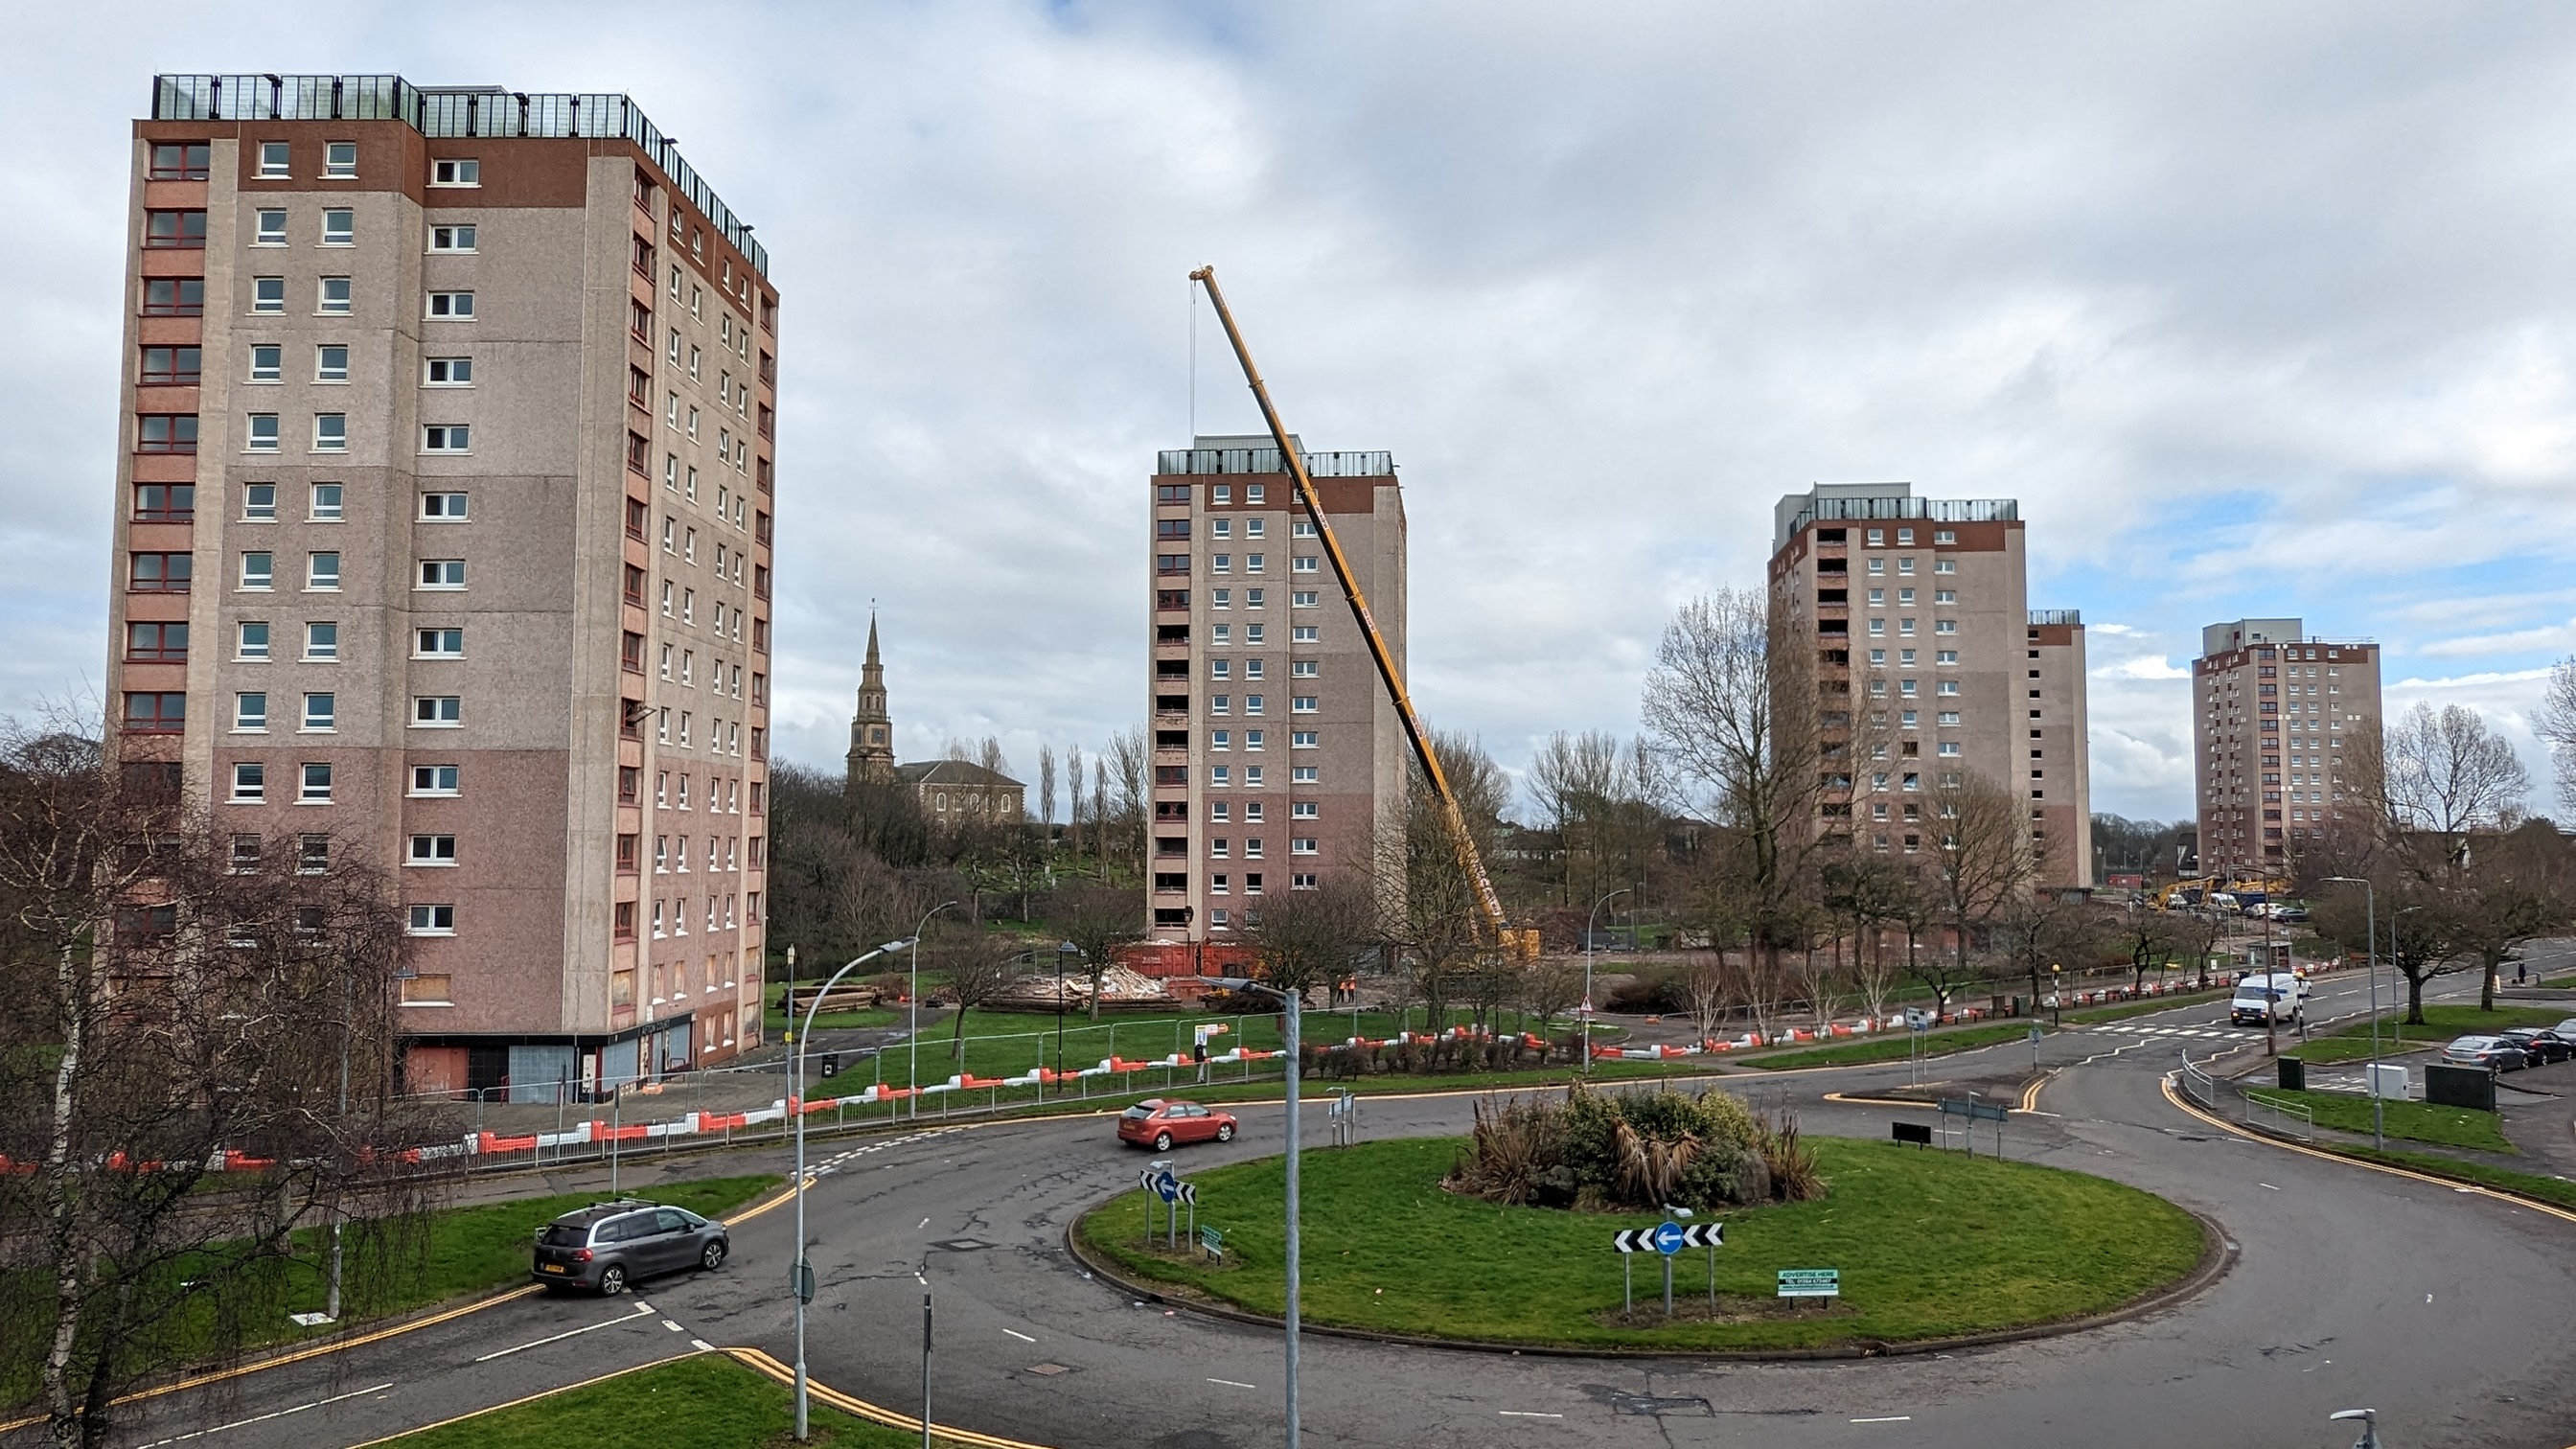 Irvine high flats fully demolished